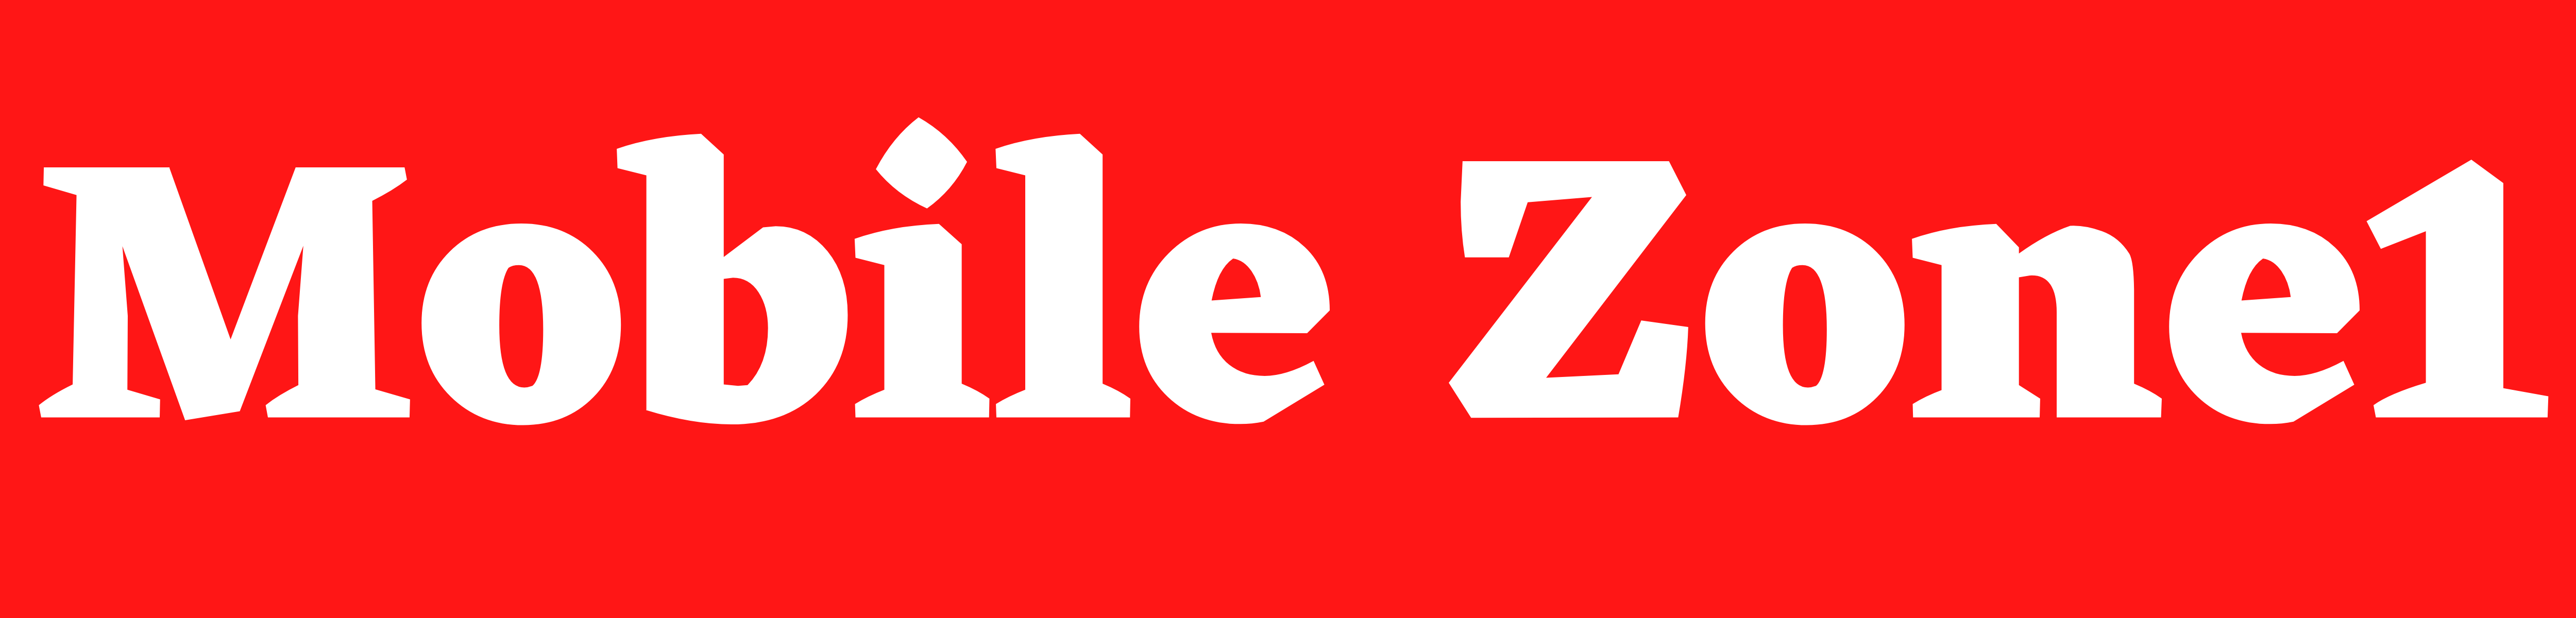 Mobile Zone1